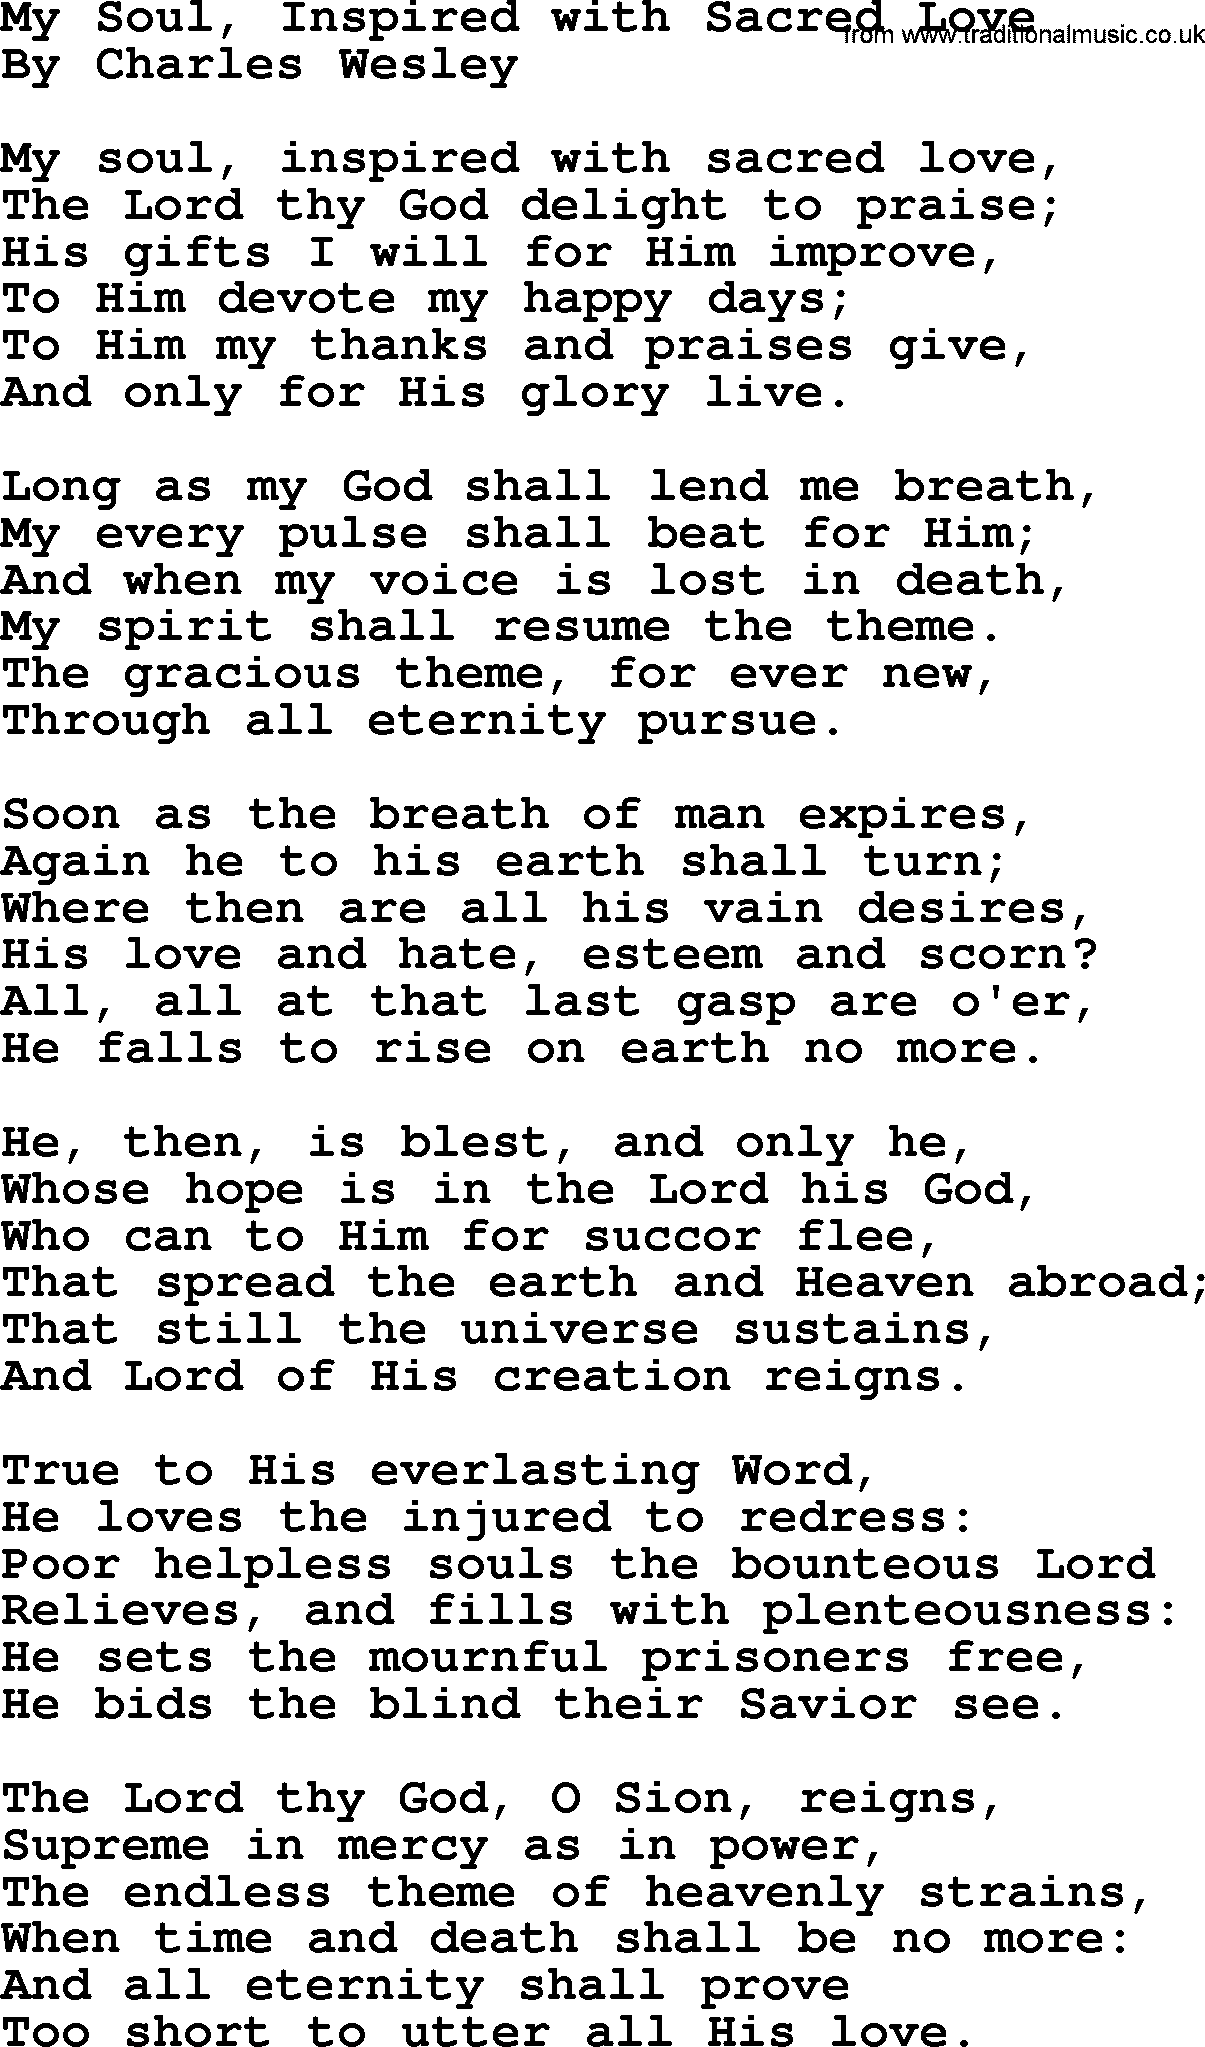 Charles Wesley hymn: My Soul, Inspired With Sacred Love, lyrics